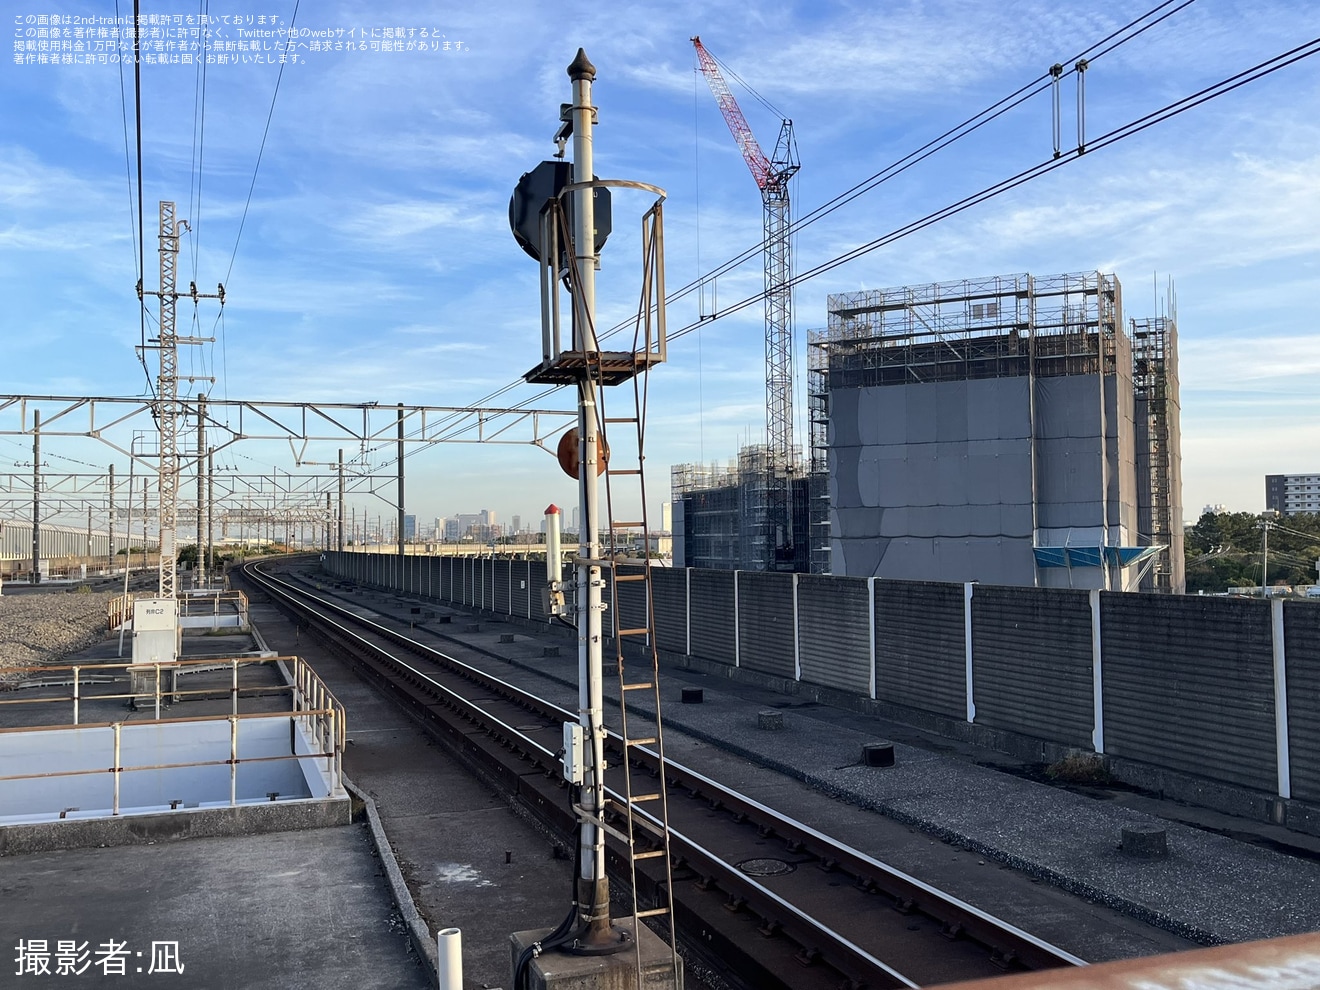 【JR東】「パークホームズ南船橋」の建設で南船橋駅の撮影地が青天時撮影は困難にの拡大写真